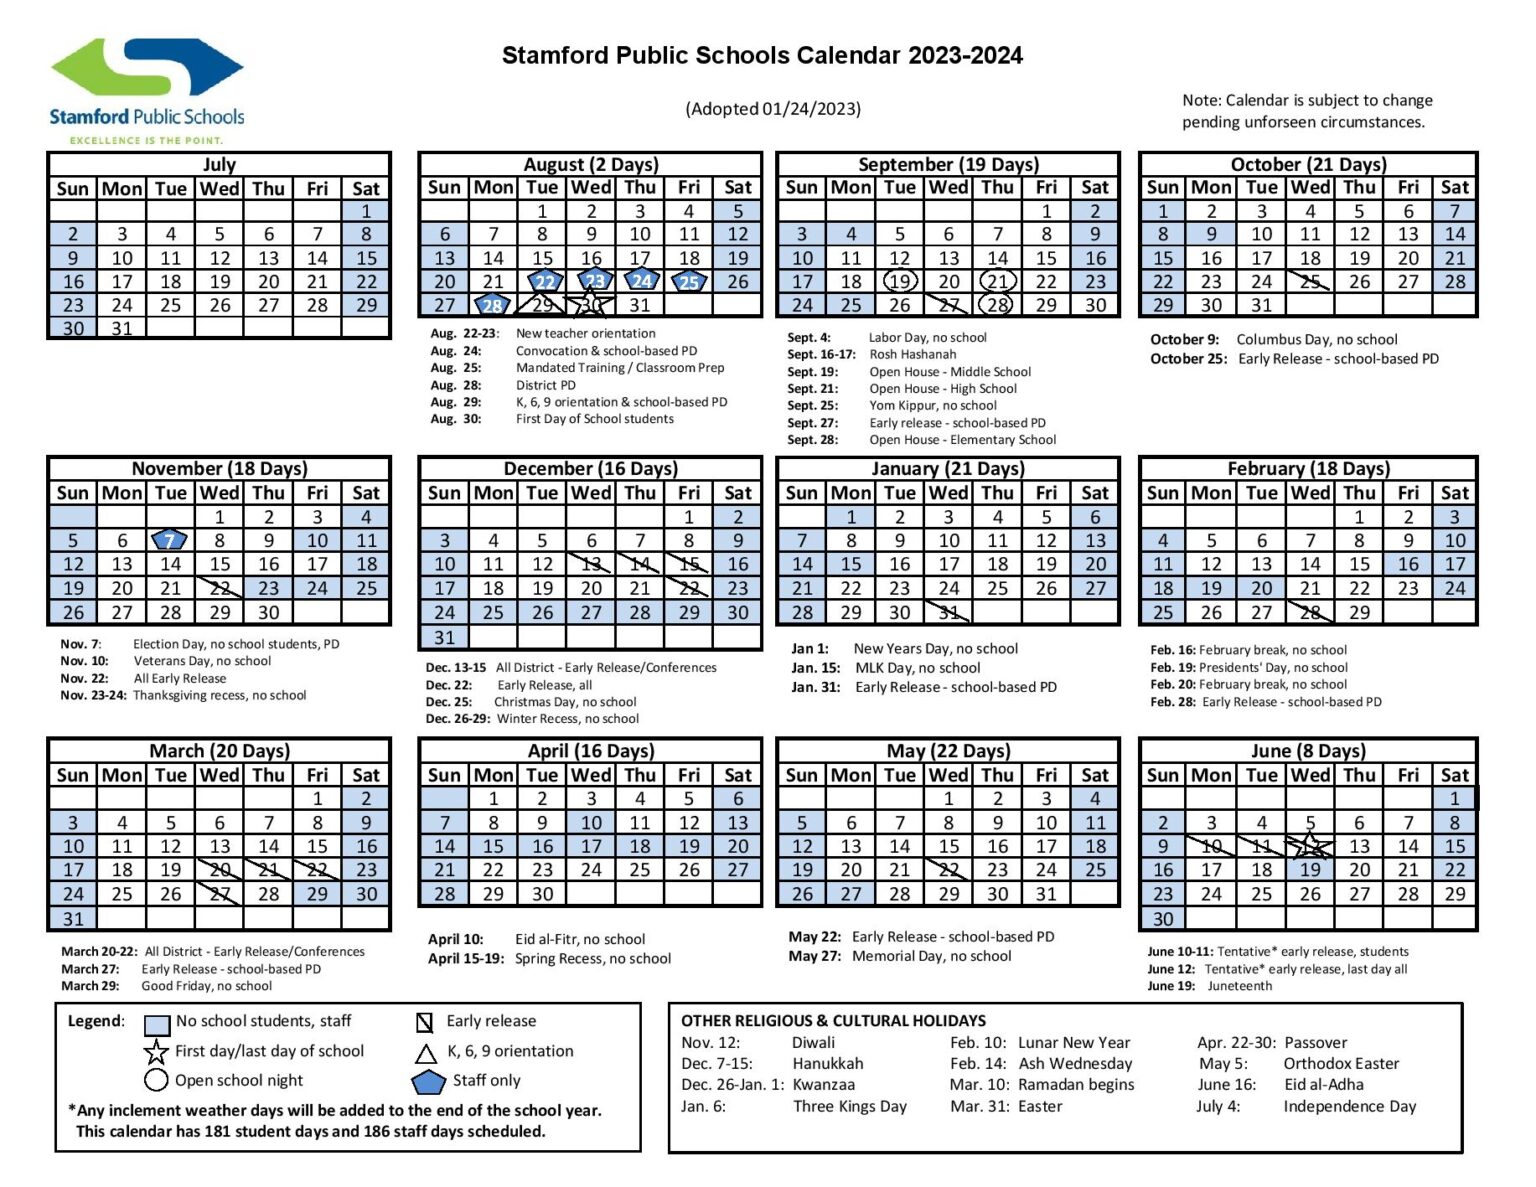 Stamford Public Schools Calendars 1536x1187 